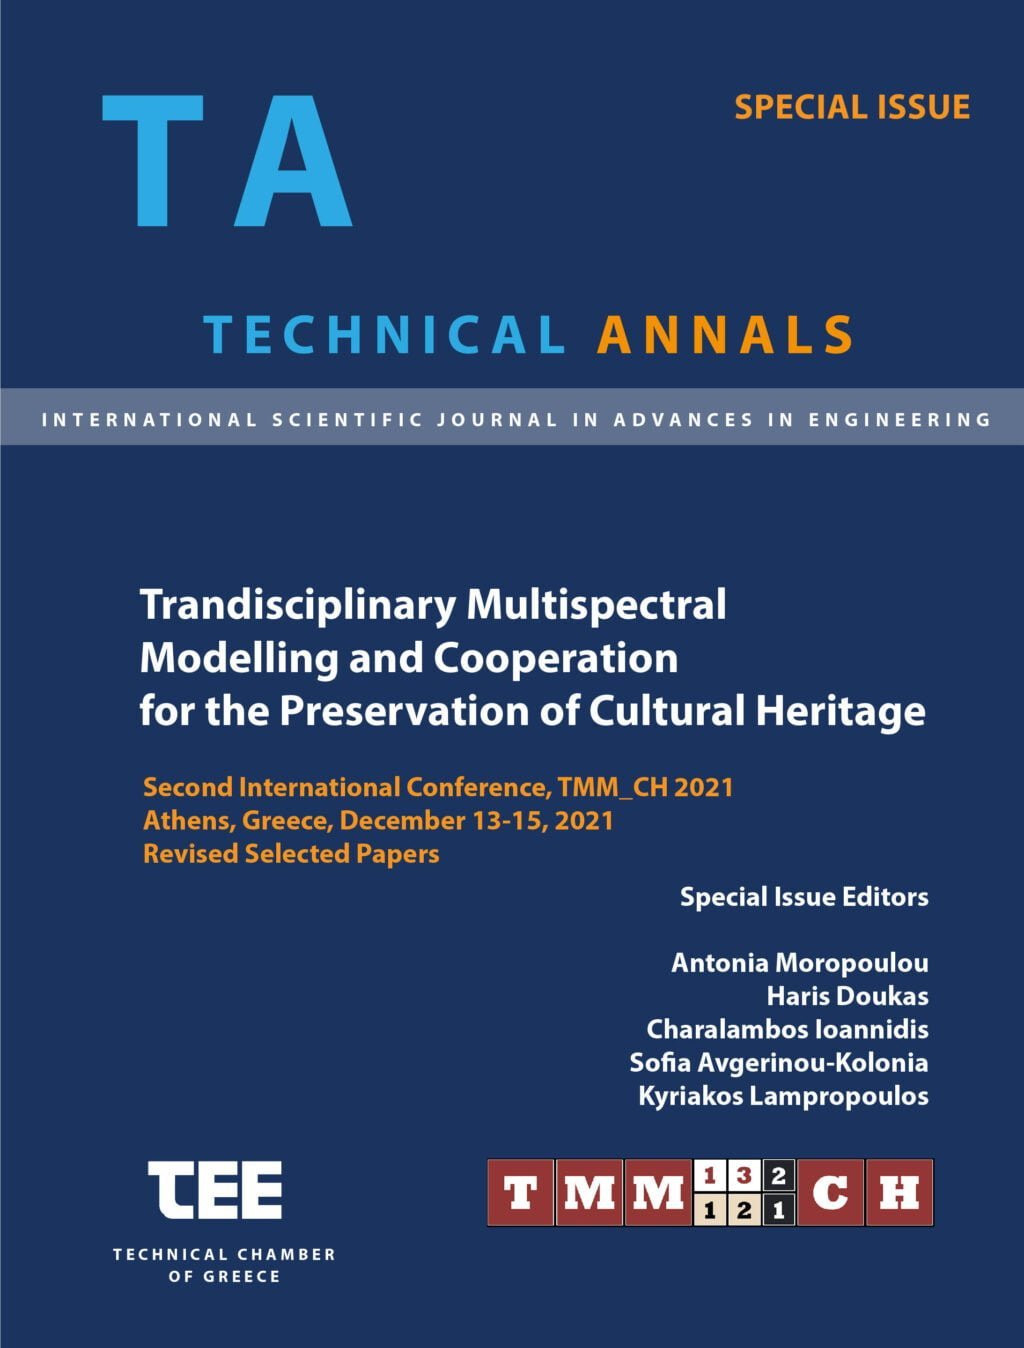 Technical Annals: To TEE επανεκδίδει το επιστημονικό περιοδικό της κοινότητας των μηχανικών